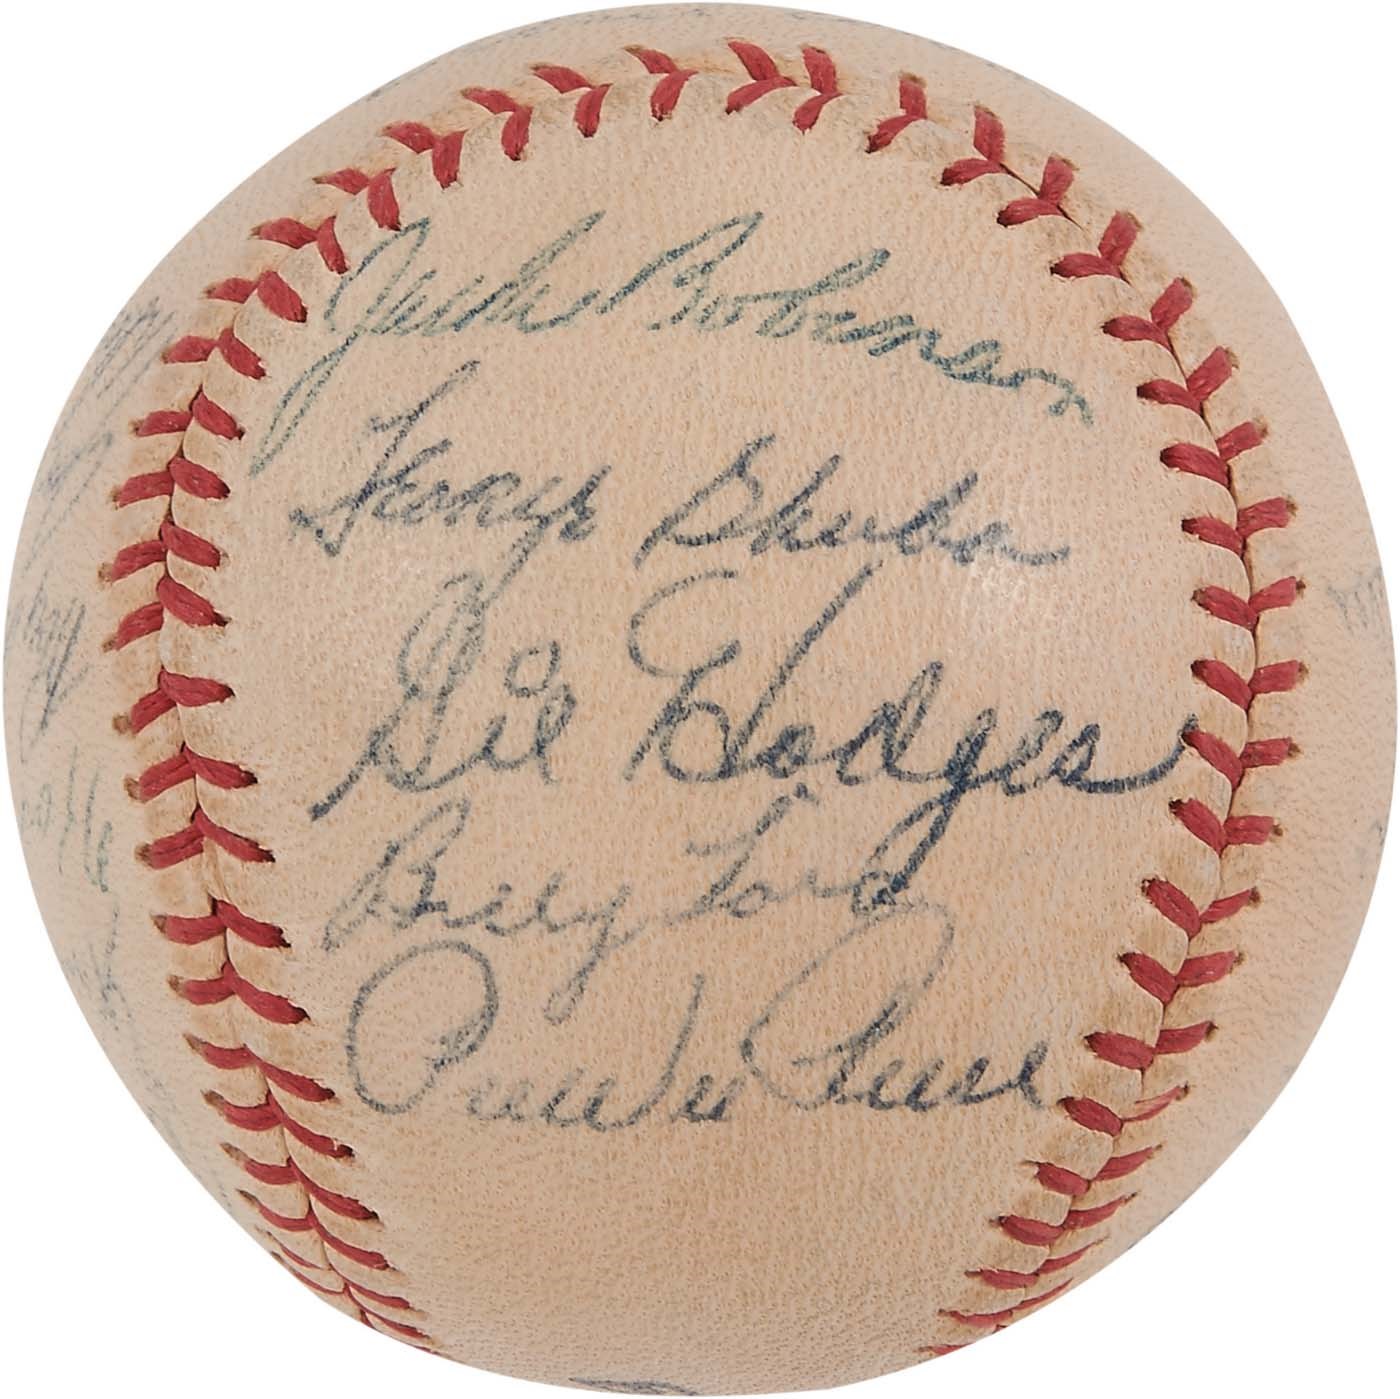 Jackie Robinson & Brooklyn Dodgers - 1955 World Champion Brooklyn Dodgers Team-Signed Baseball w/Robinson & Campanella (PSA)